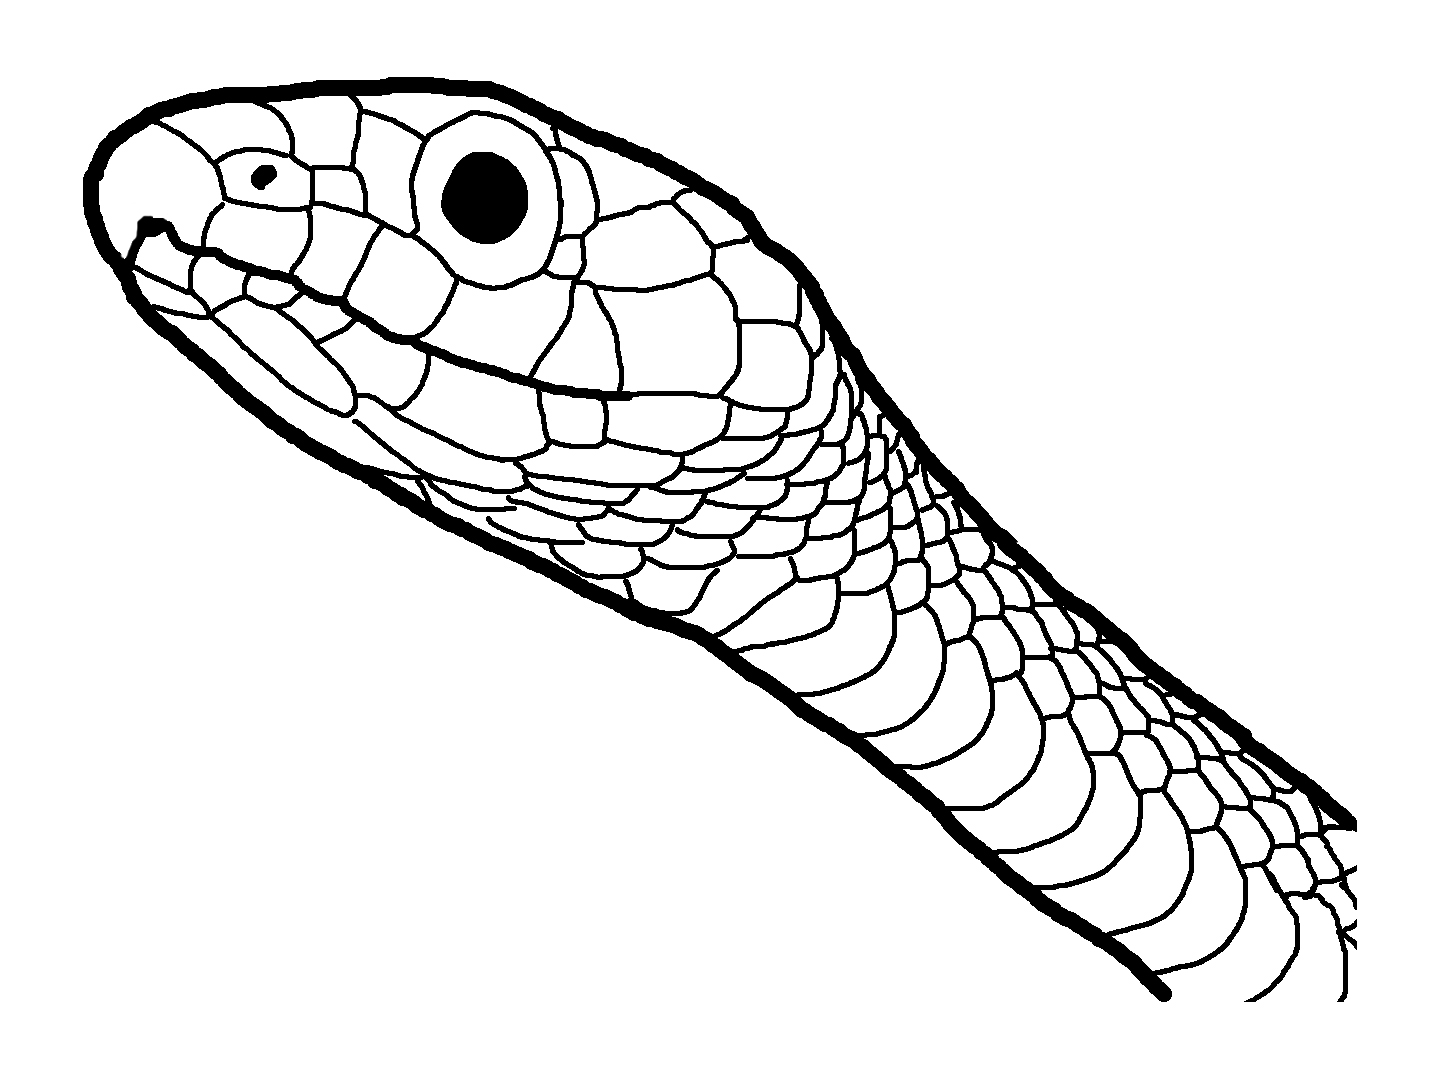 Brown Tree Snake coloring #11, Download drawings